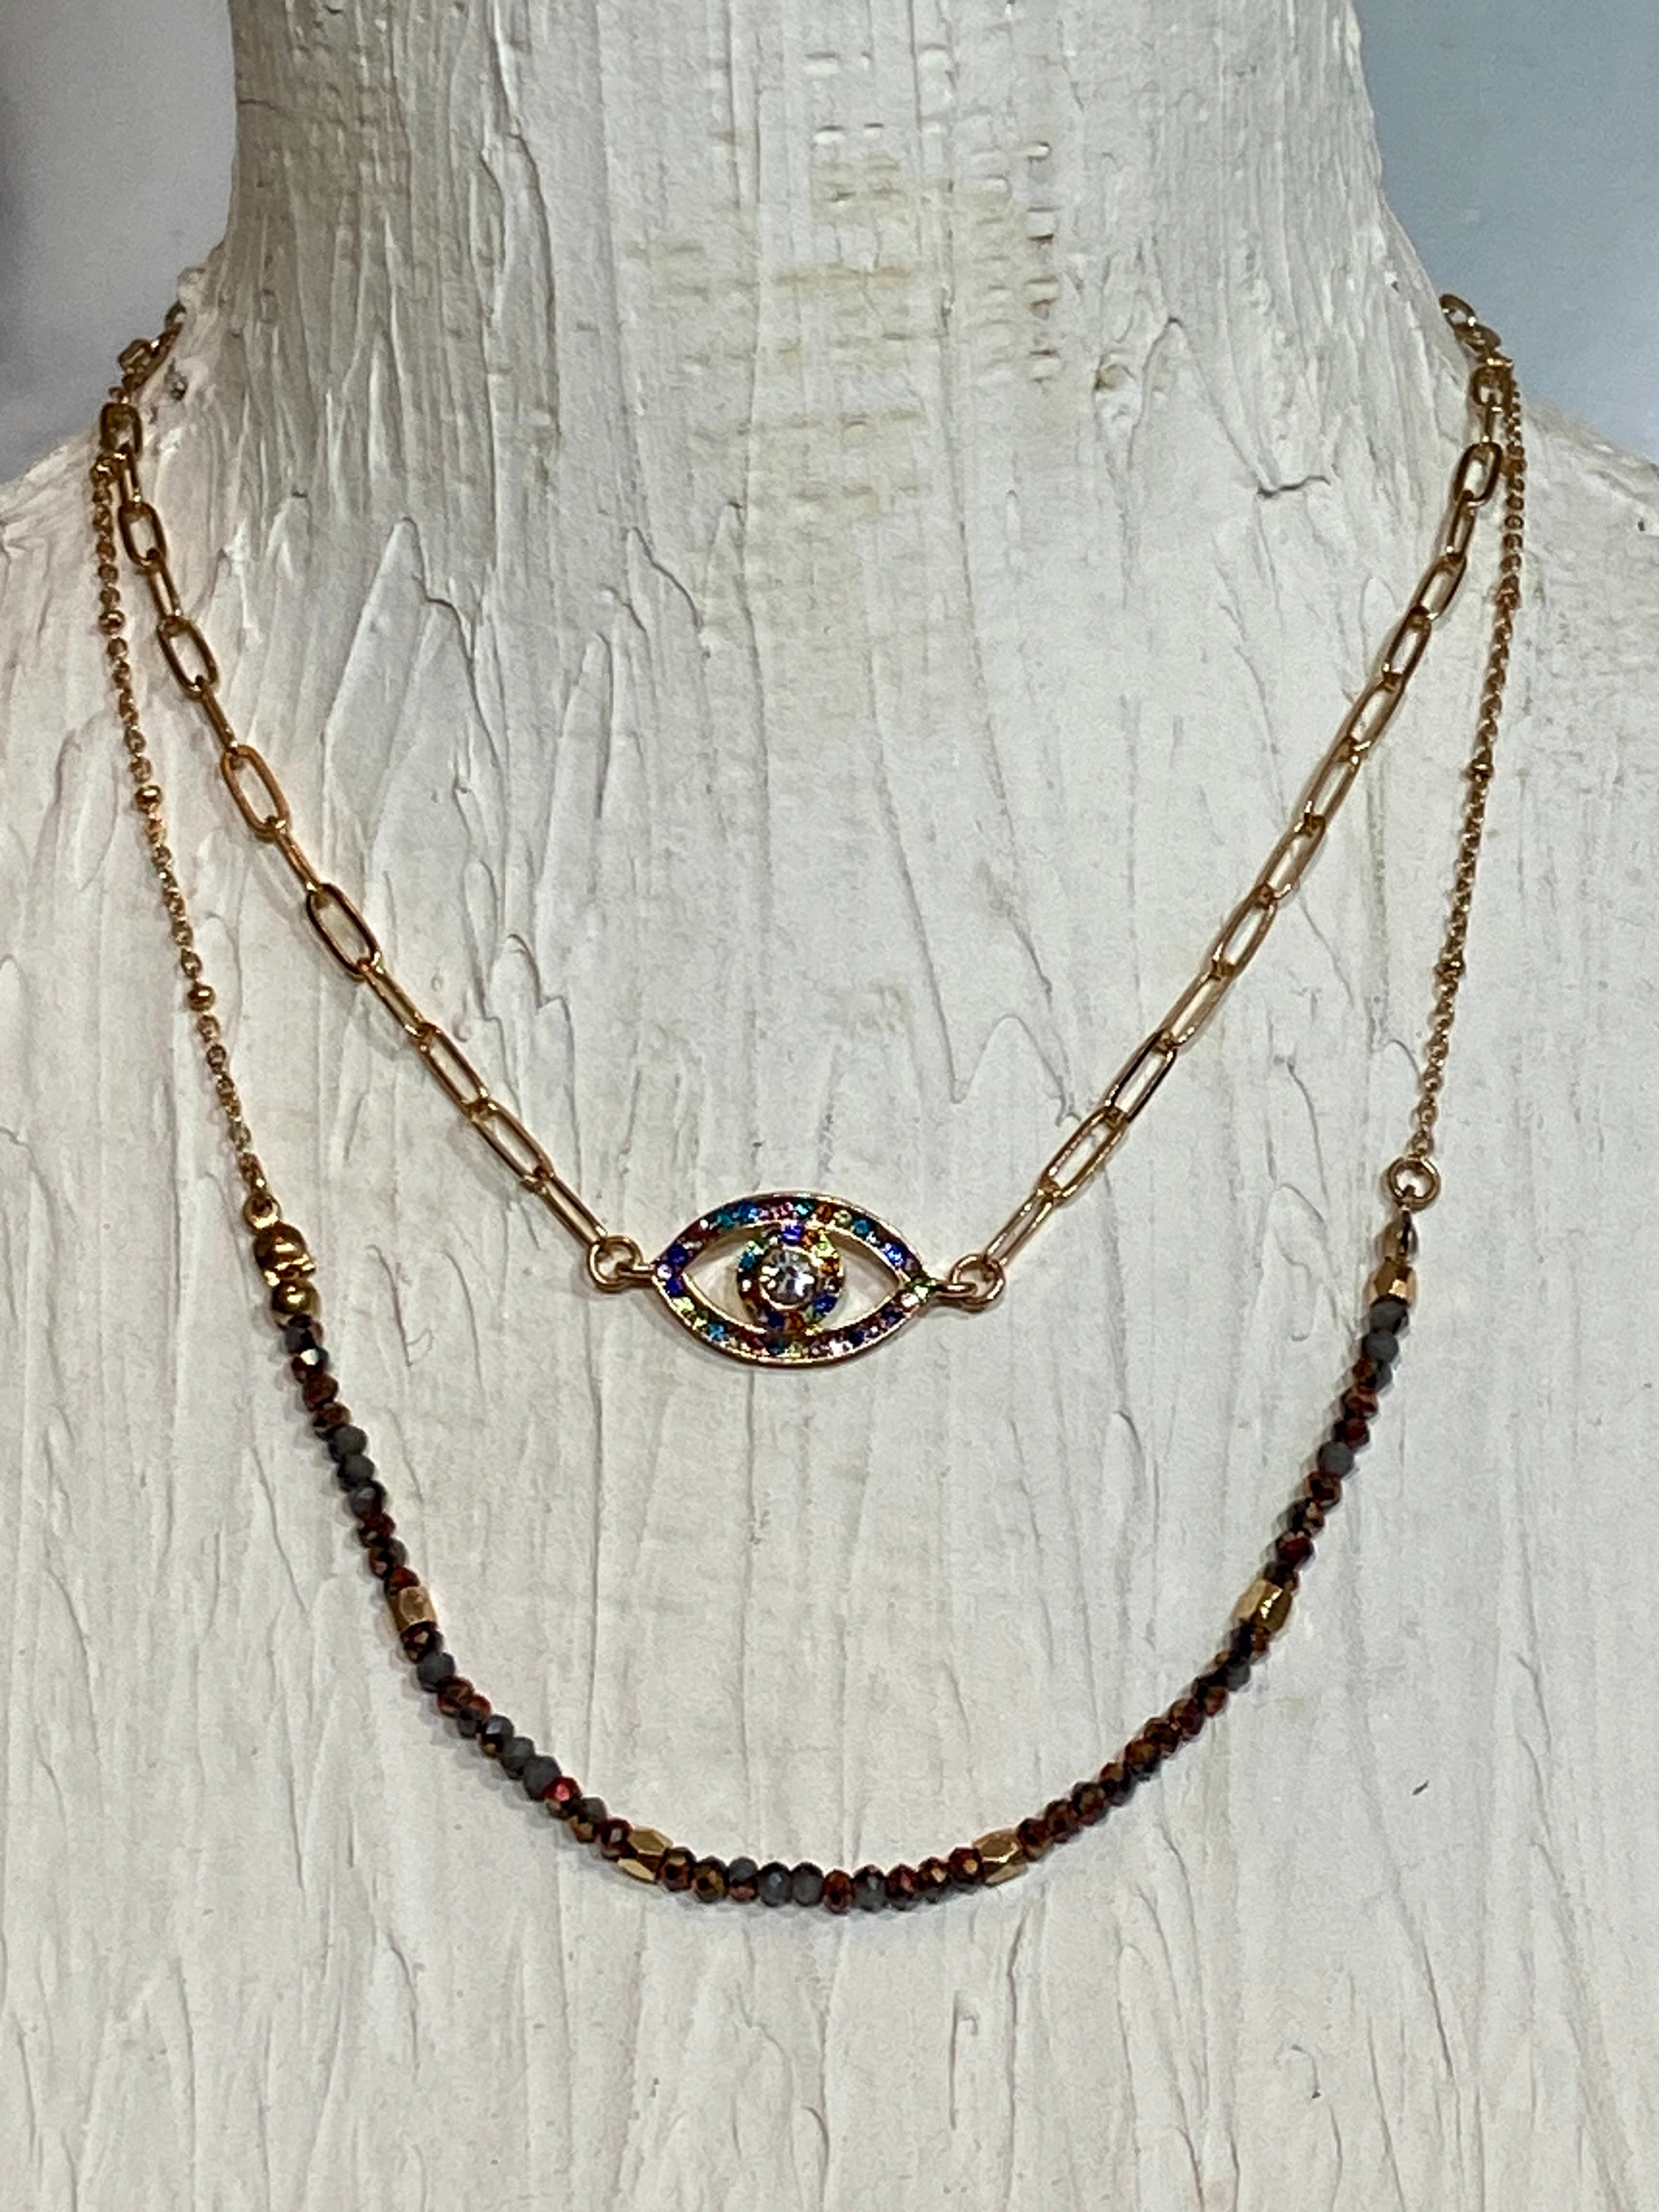 Gemstone evil eye in a chain